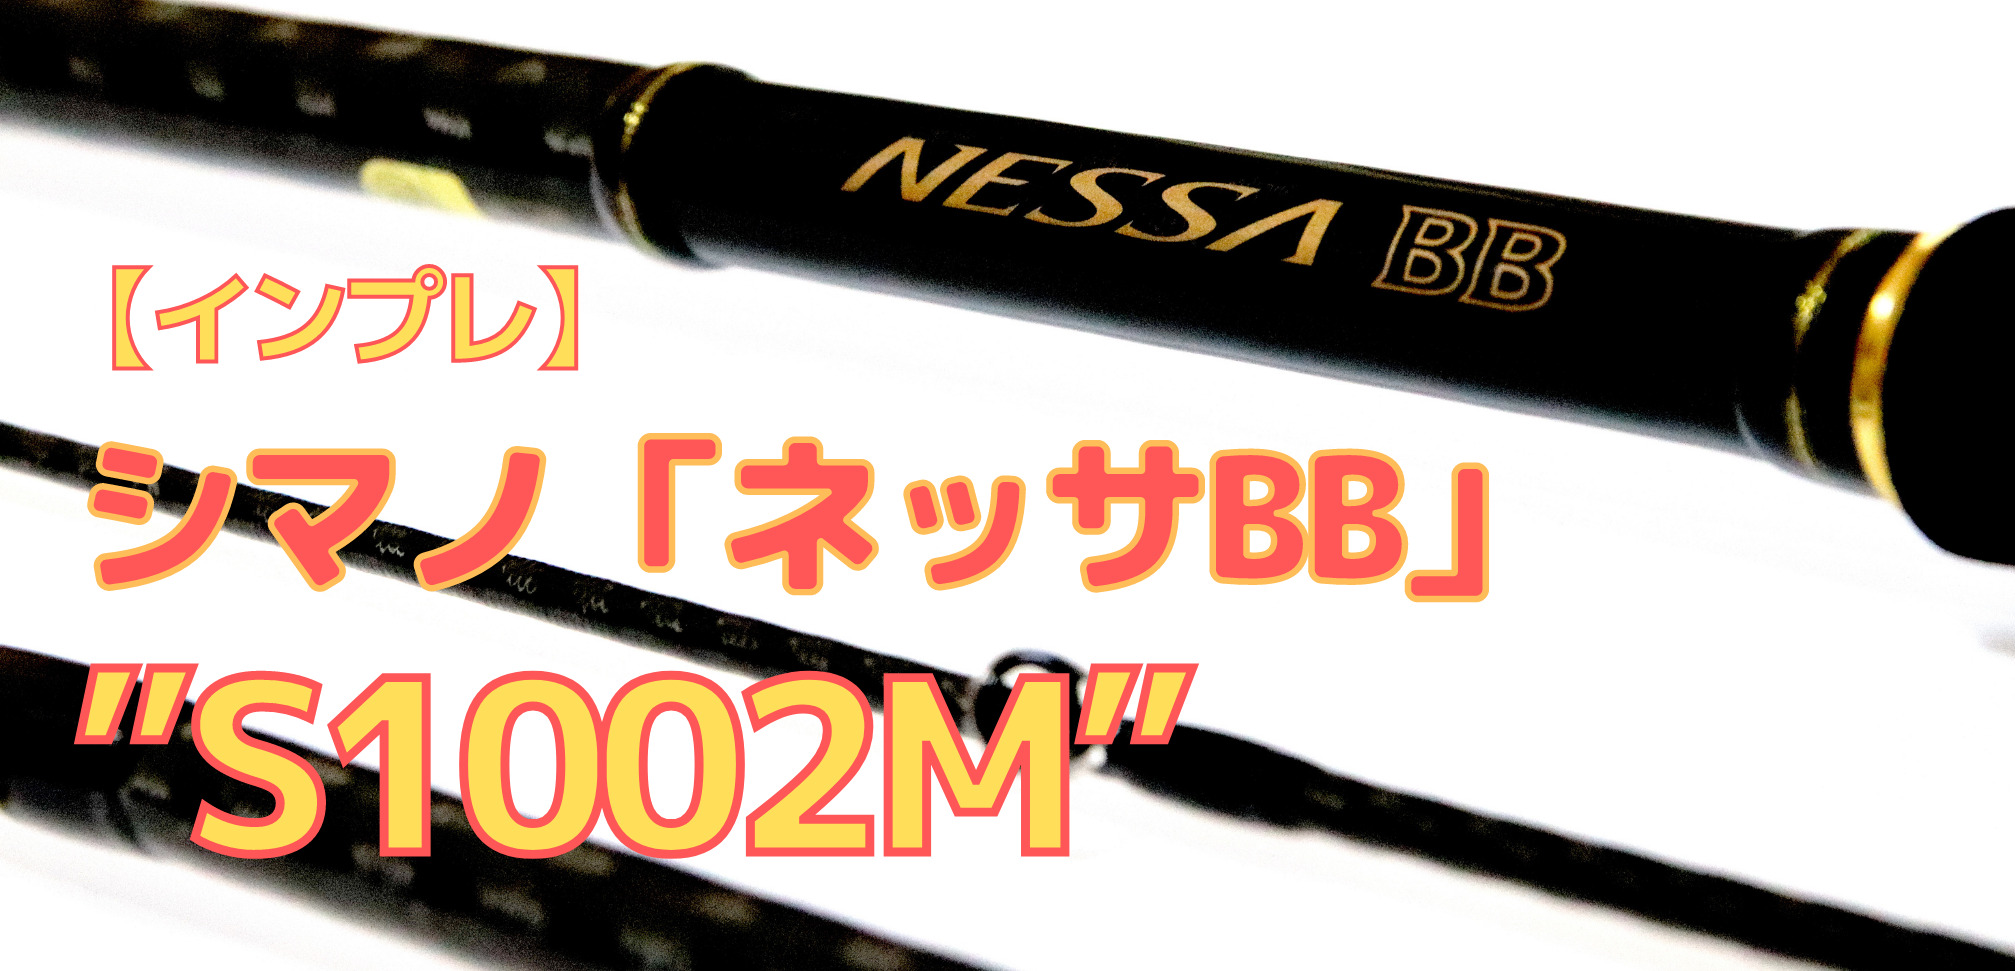 NESSA S1002M 初代ネッサ - ロッド